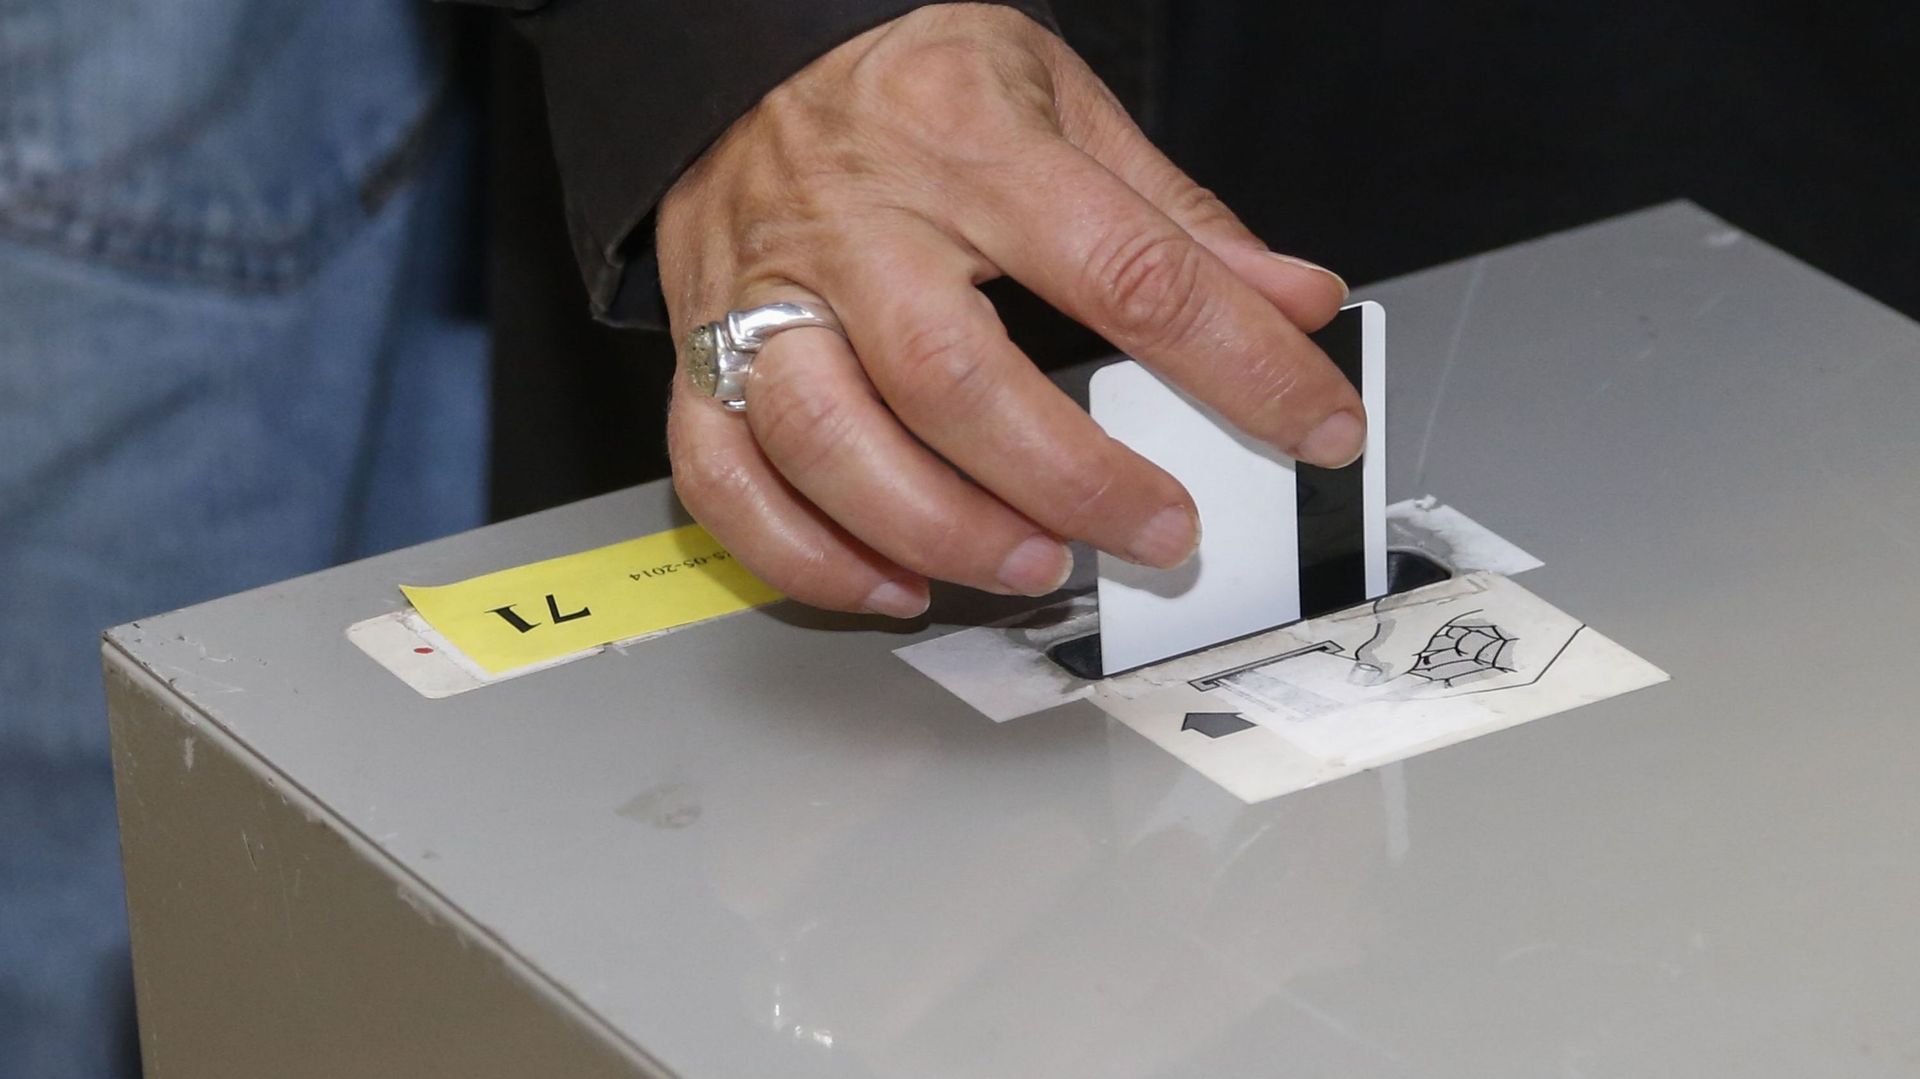 Prochain mode de scrutin: électronique ou papier?   